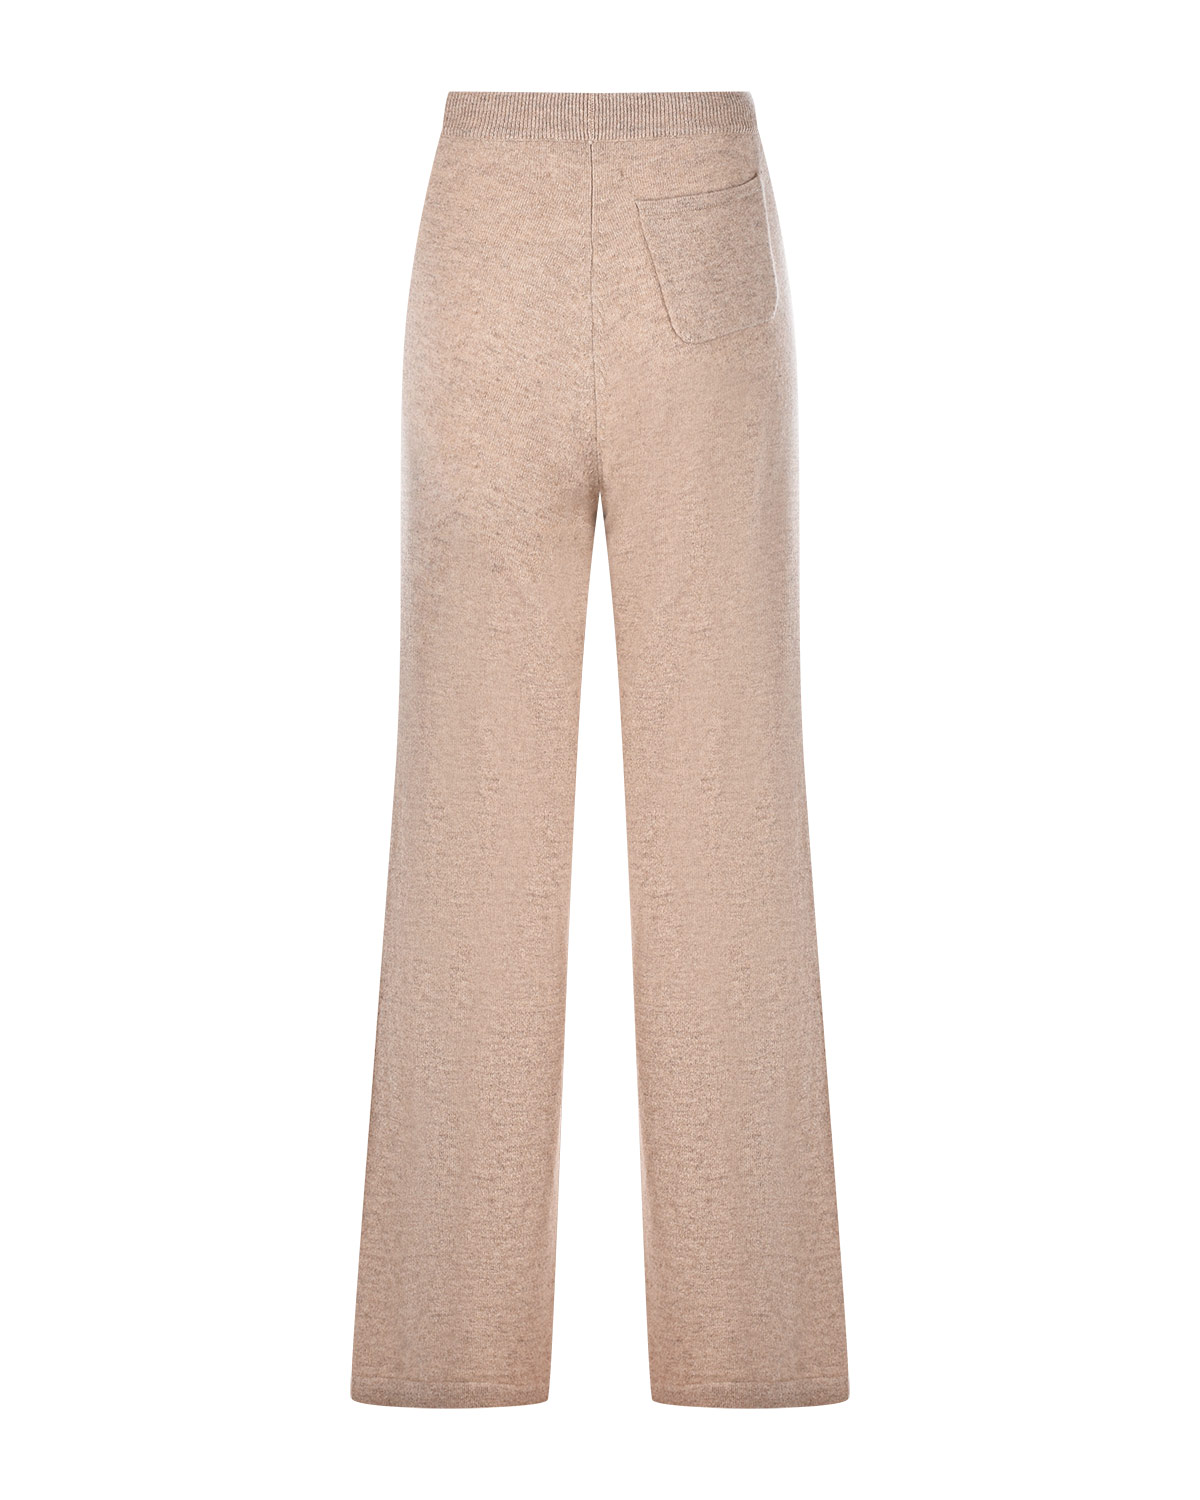 Бежевые брюки с поясом на кулиске Chinti&Parker, размер 38, цвет бежевый - фото 7